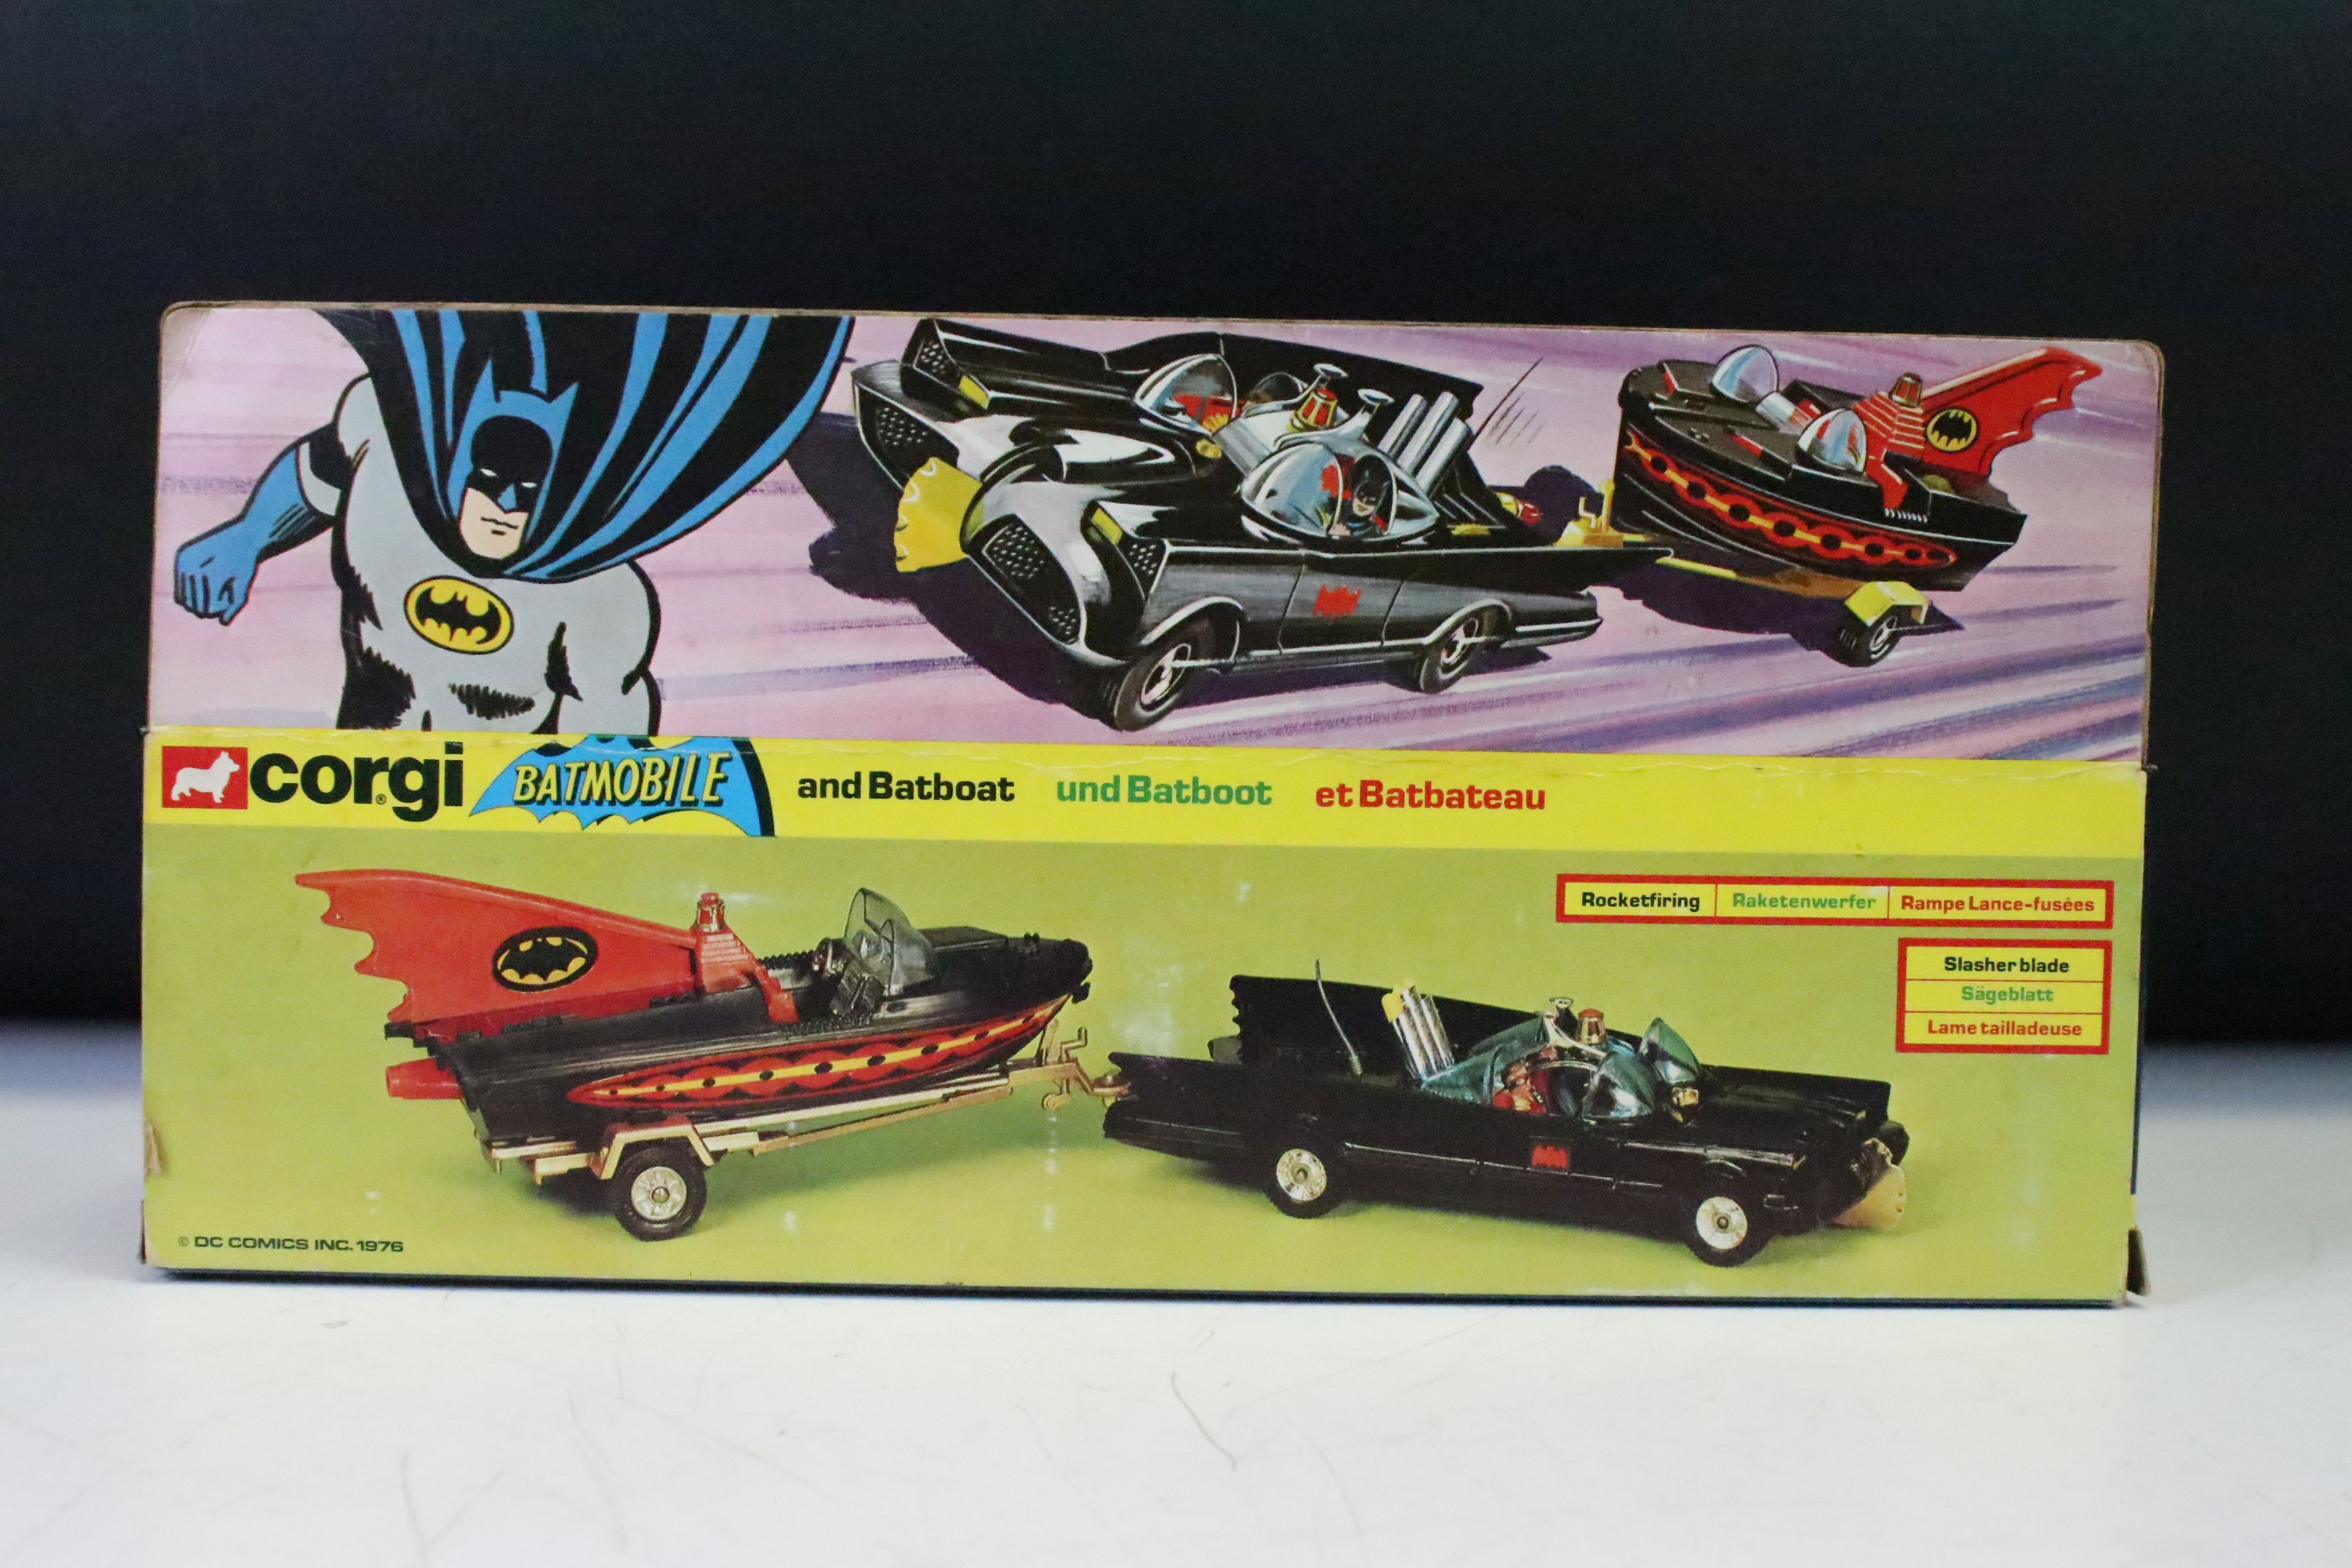 Boxed Corgi 3 Batmobile and Batboat diecast model set, complete with Batman & Robin figures, diecast - Image 5 of 5